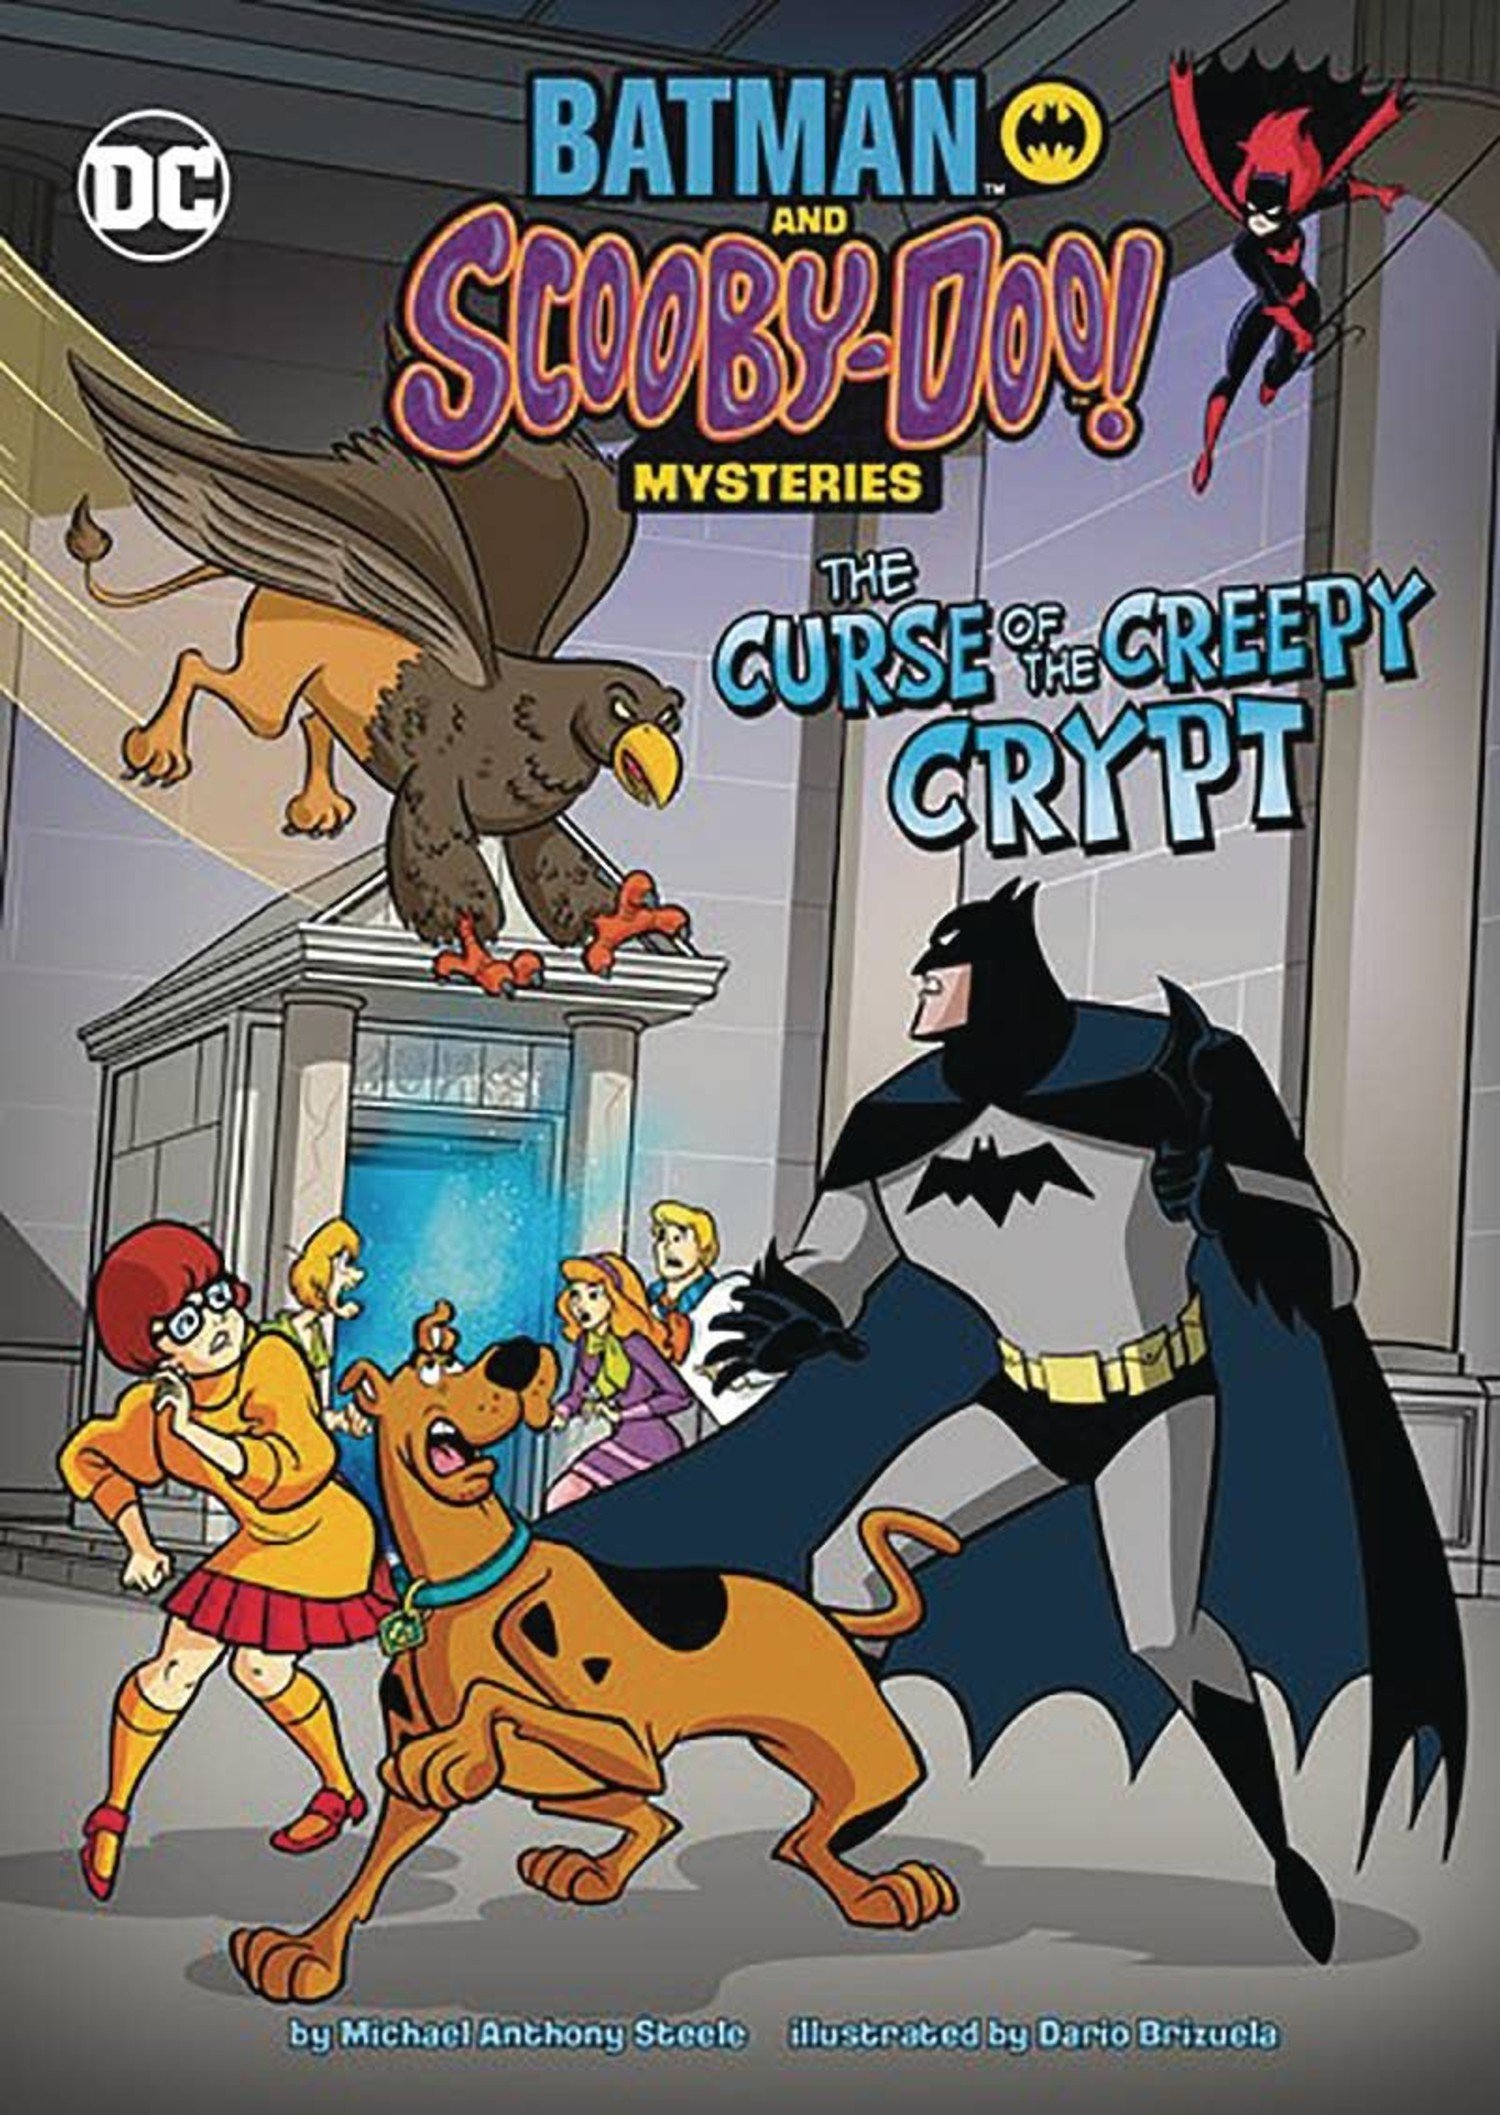 BATMAN SCOOBY DOO MYSTERIES CURSE OF CREEPY CRYPT - Illusive Comics